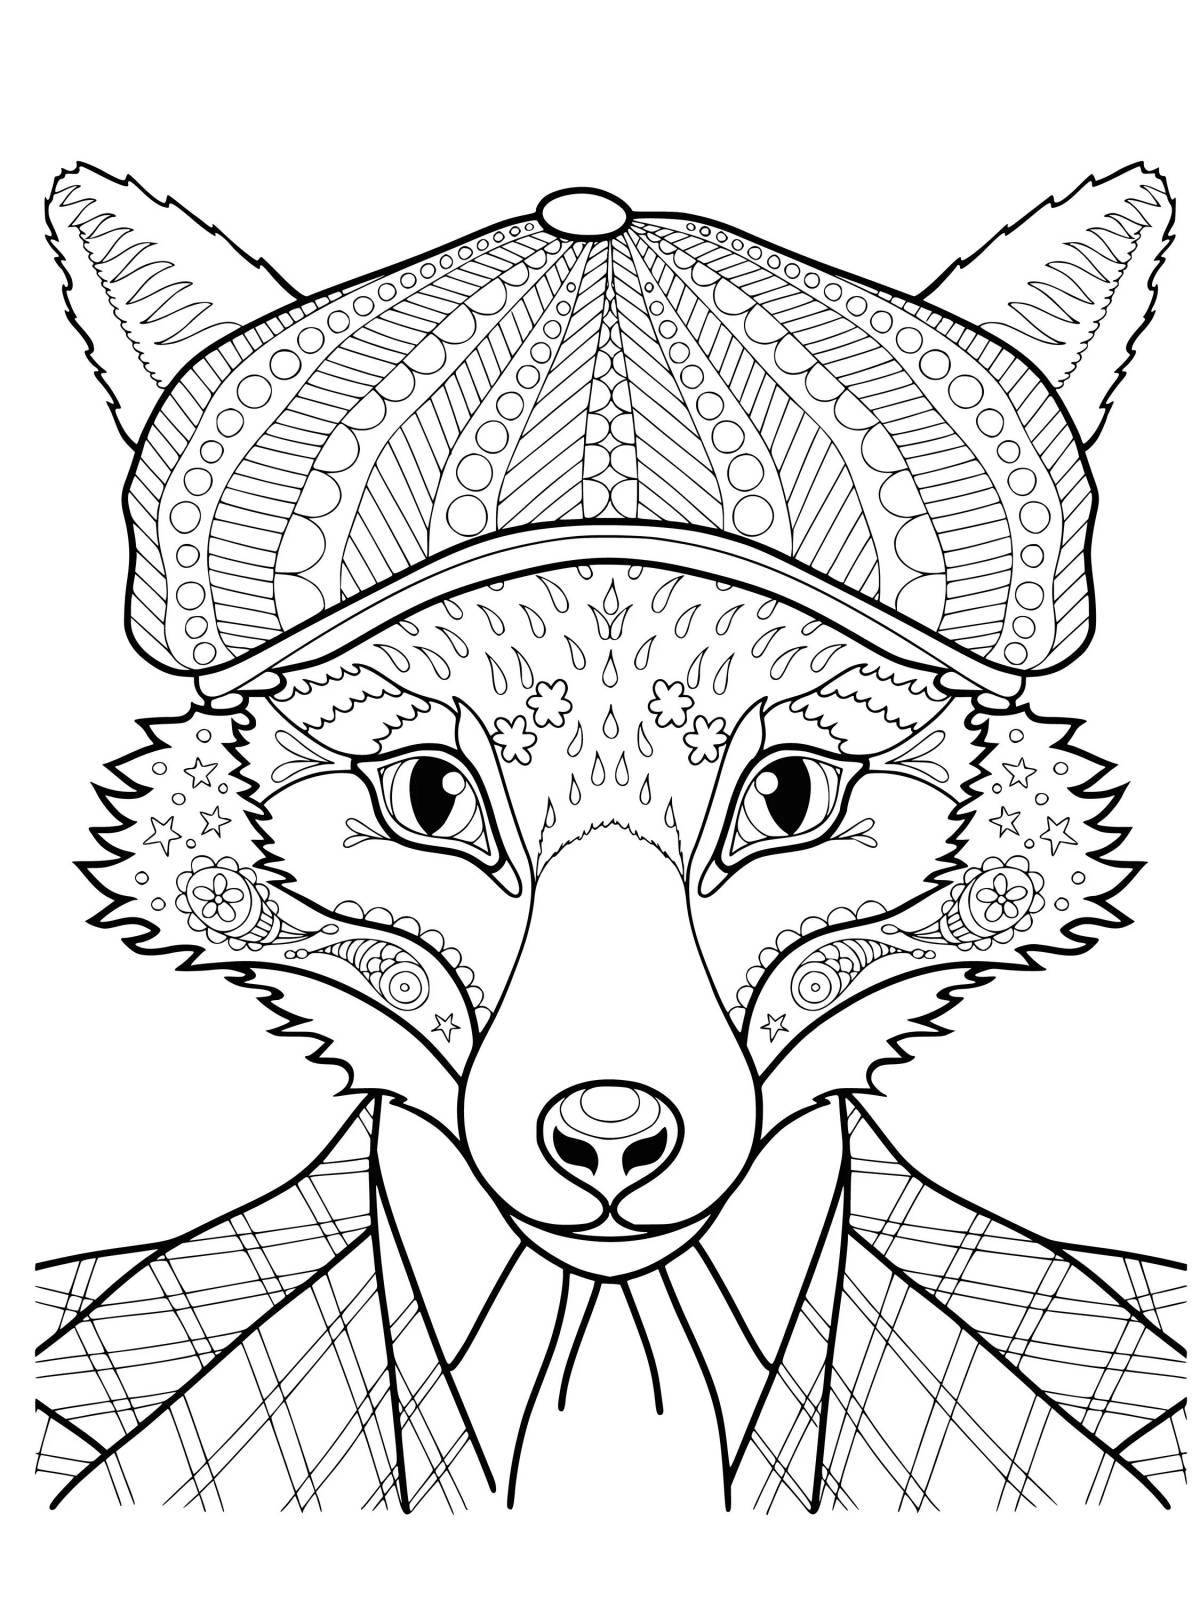 Colourful fox anti-stress coloring book